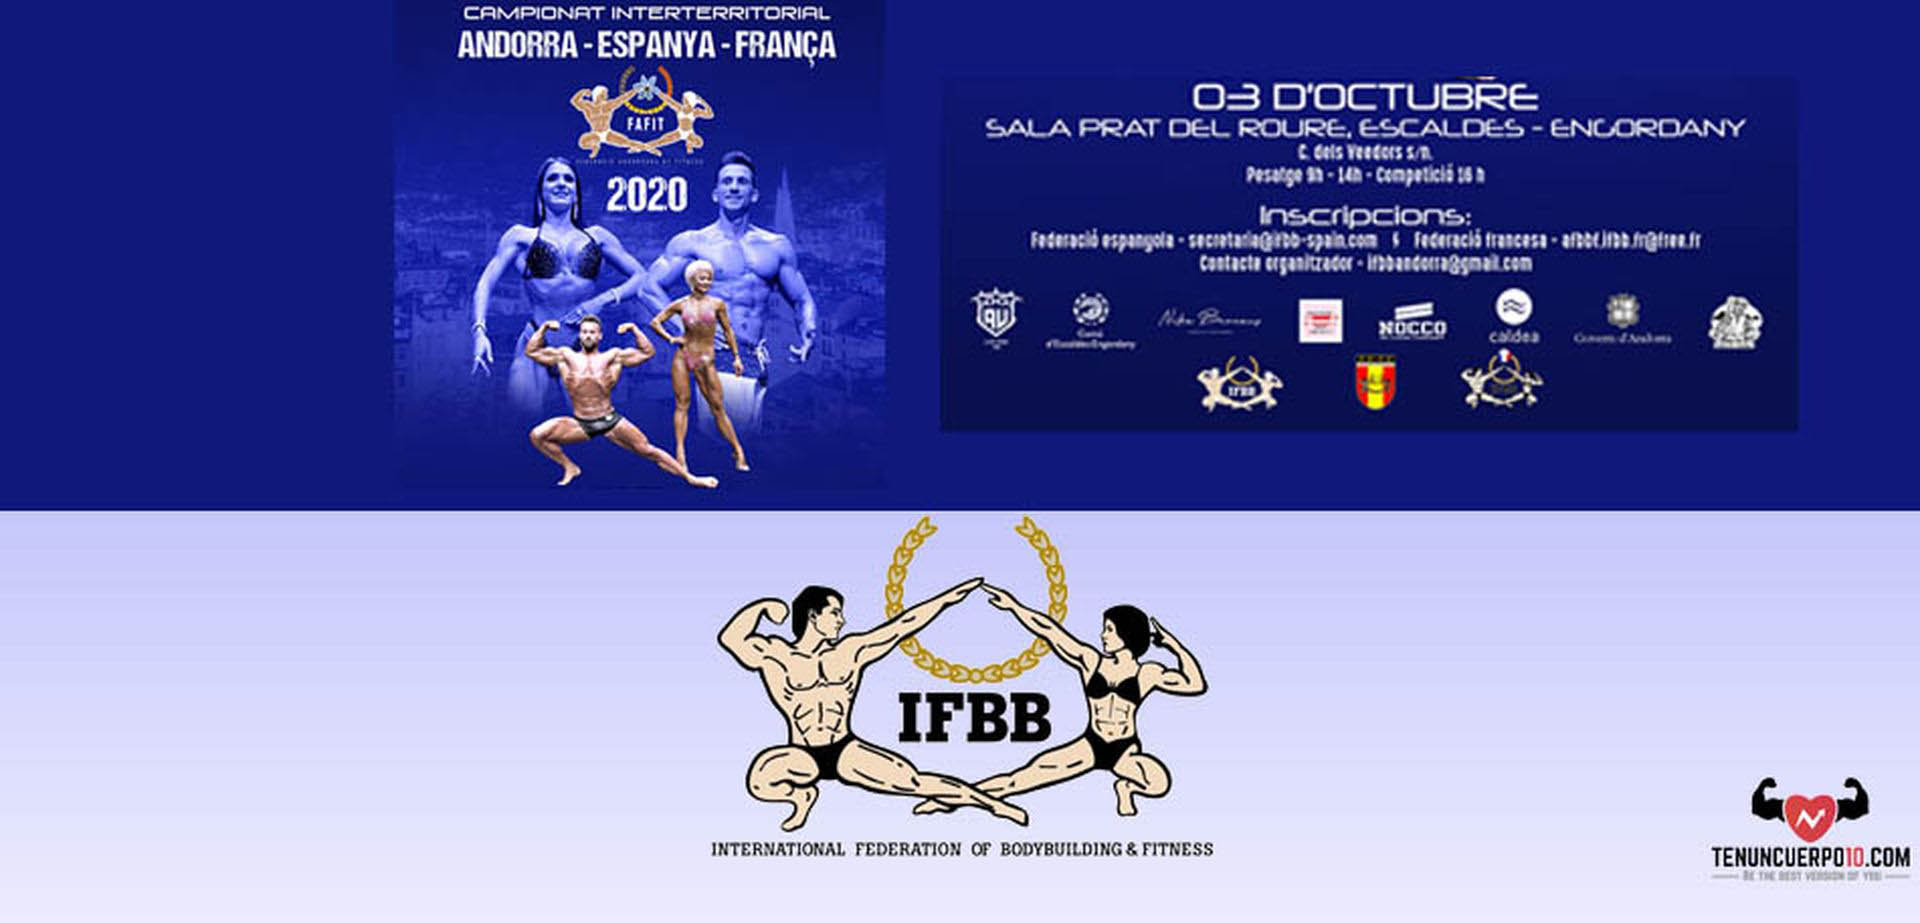 2020 10 campeonato internacional IFBB Andorra new